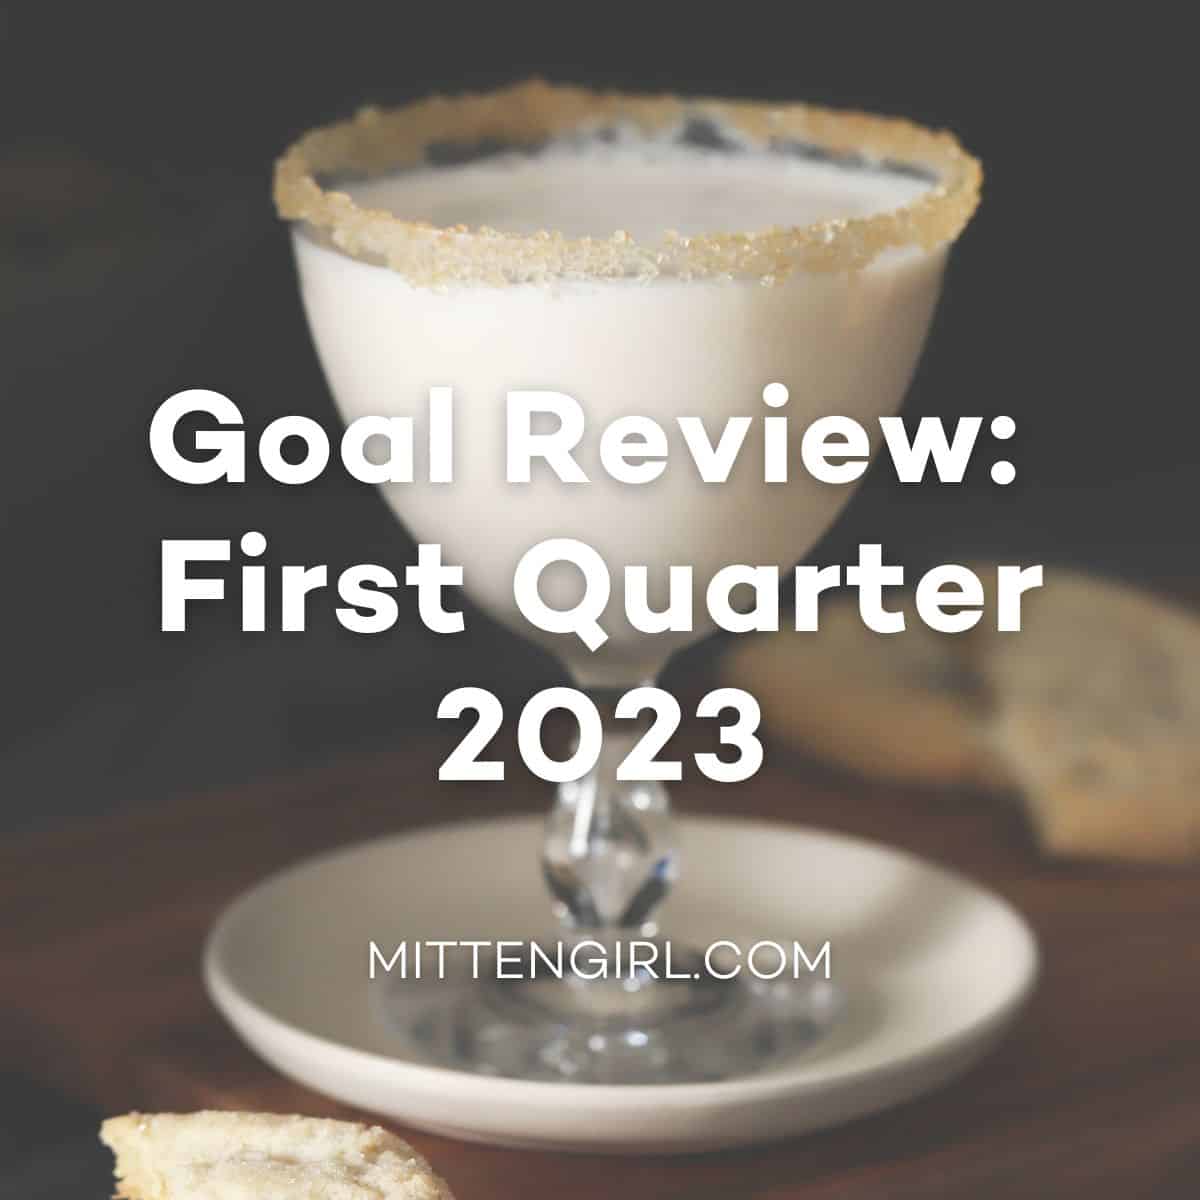 Goal Review: First Quarter 2023.